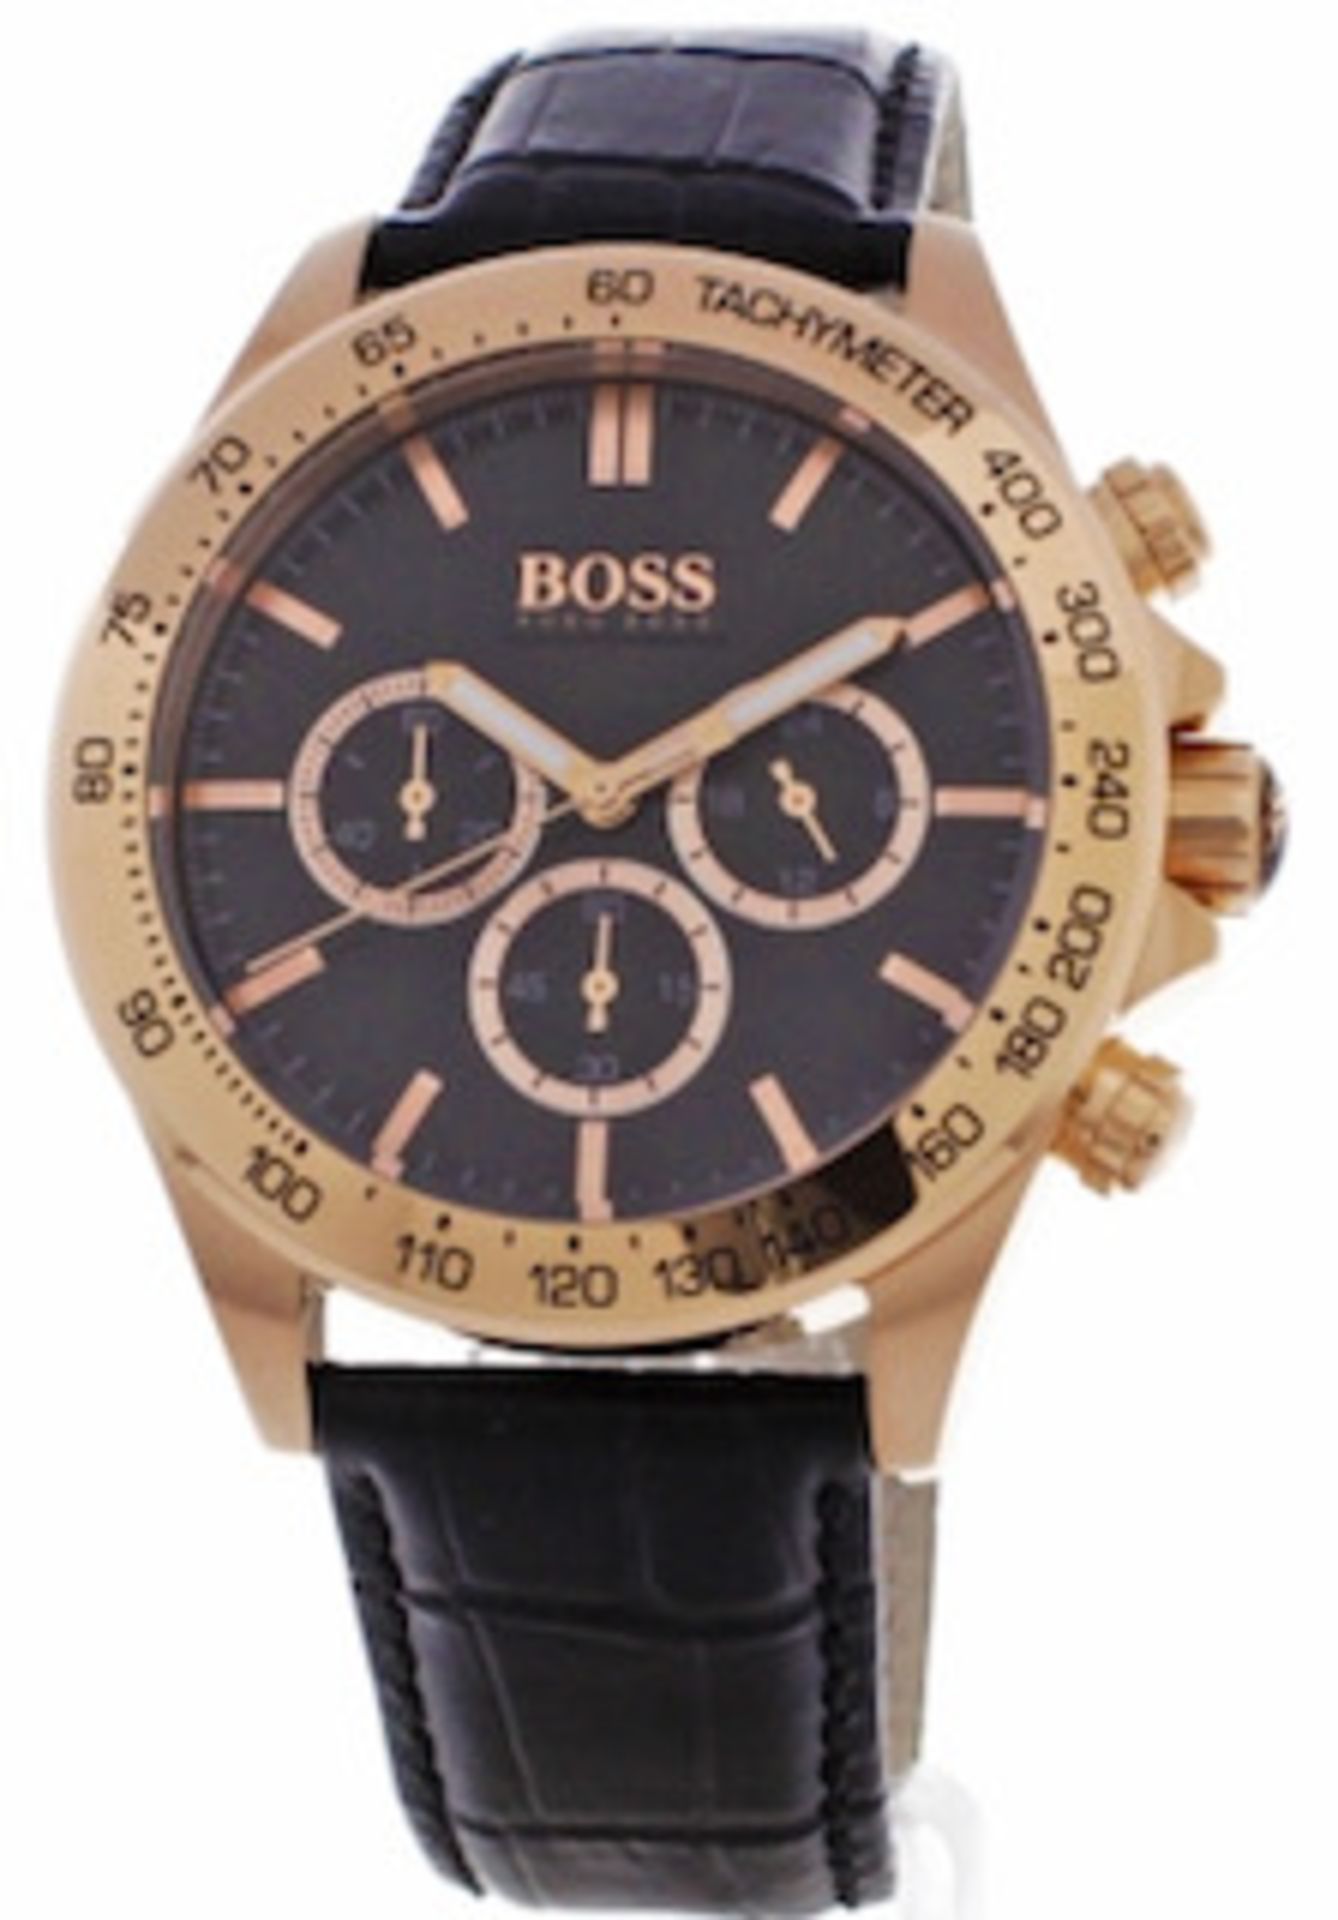 Hugo Boss 1513179 Men's Ikon Rose Gold Bezel Black Leather Strap Chronograph Watch - Image 4 of 5